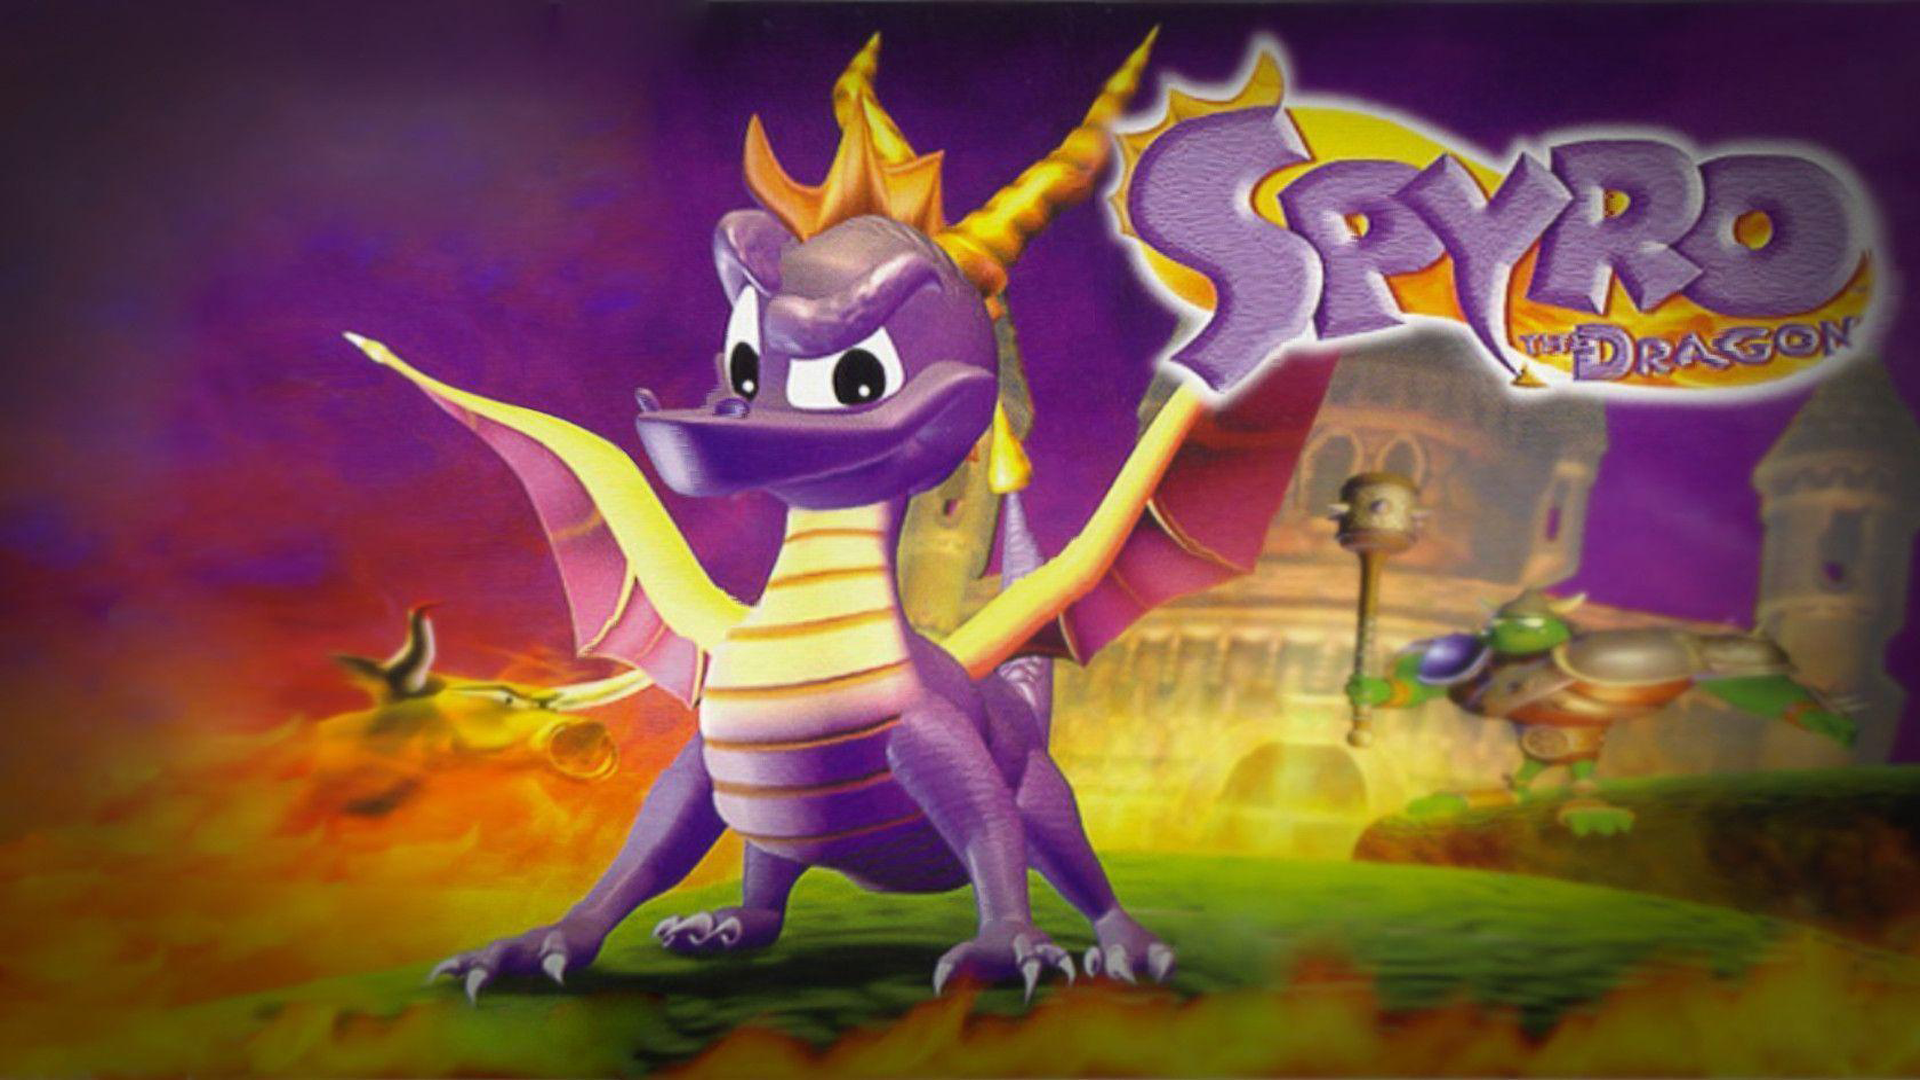 Let’s Play Spyro the Dragon